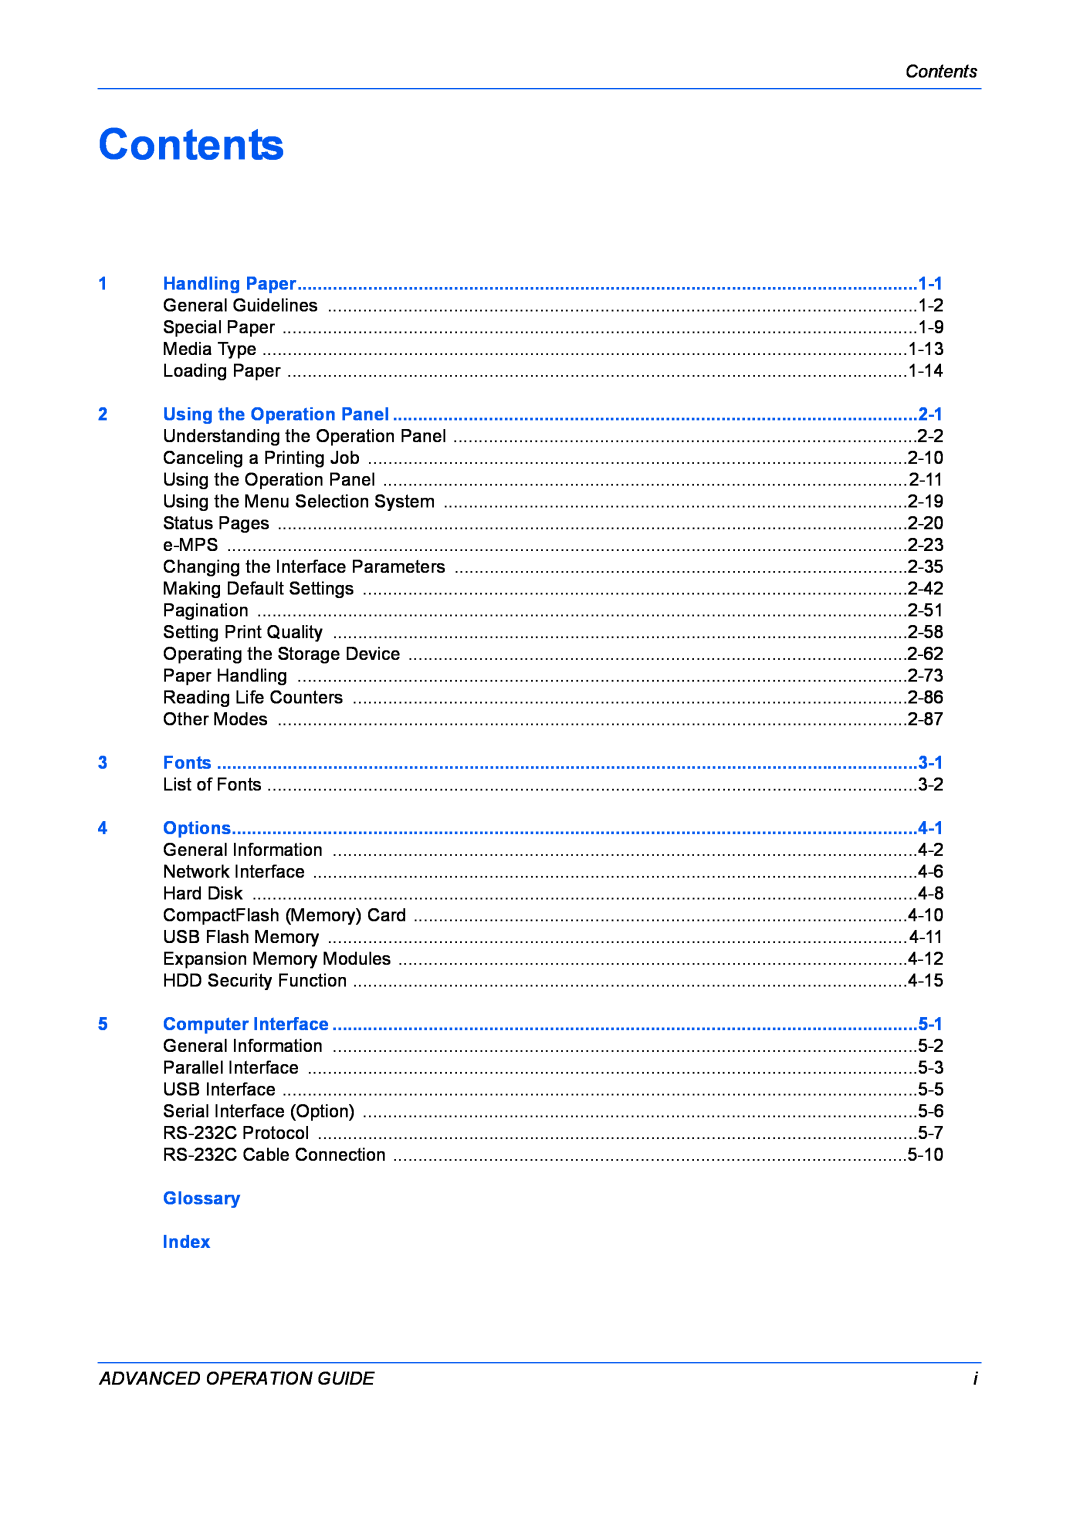 Kyocera 9530DN manual Contents, Glossary Index 